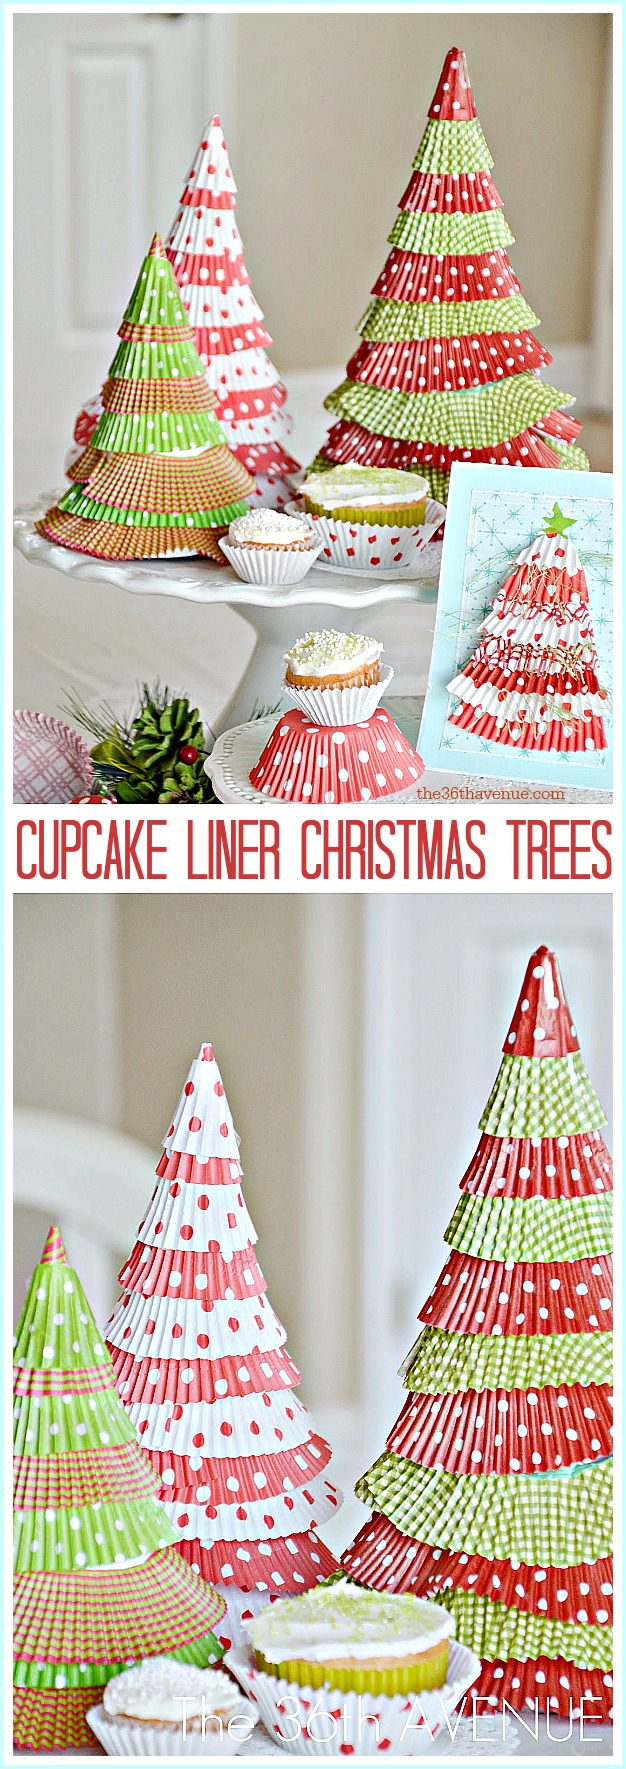 Cupcake Liner Christmas Trees the36thavenue.com